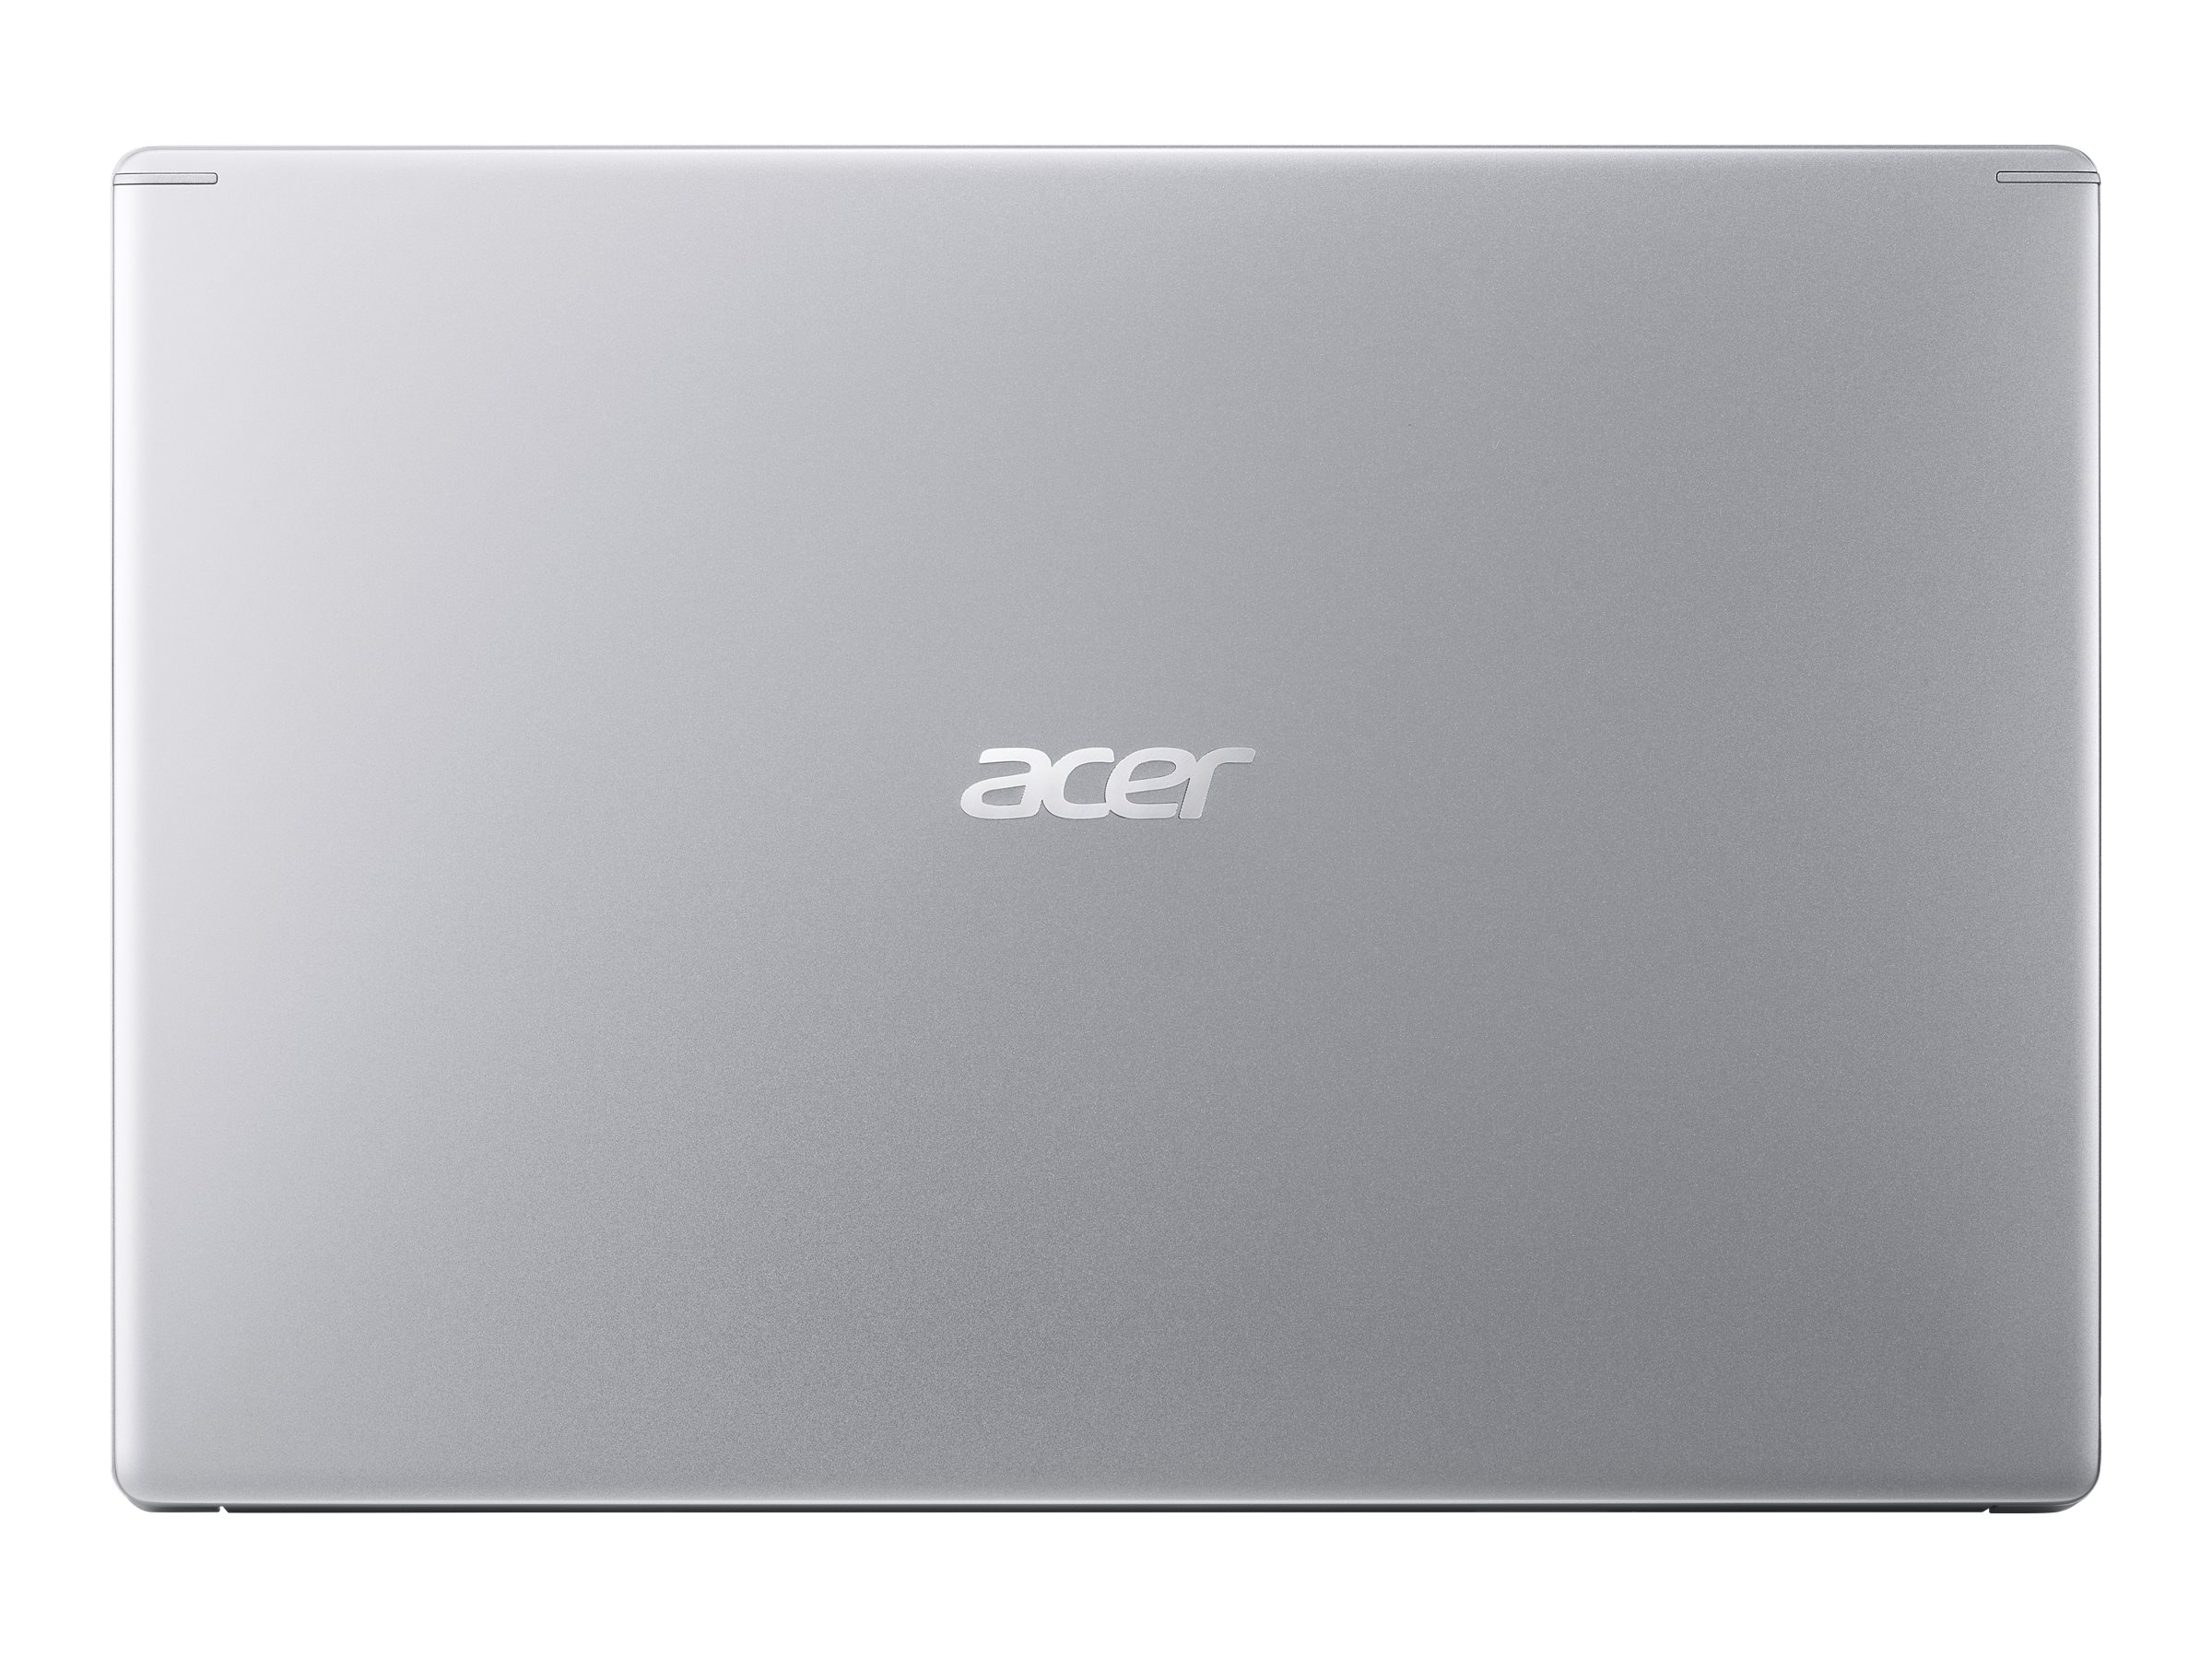 Acer Aspire 5 A515-44-R41B - Ryzen 5 4500U / 2.3 GHz - Win 10 Home 64-bit - 8 GB RAM - 256 GB SSD - 15.6" IPS 1920 x 1080 (Full HD) - Radeon HD - Wi-Fi, Bluetooth - pure silver - kbd: US International - image 4 of 8